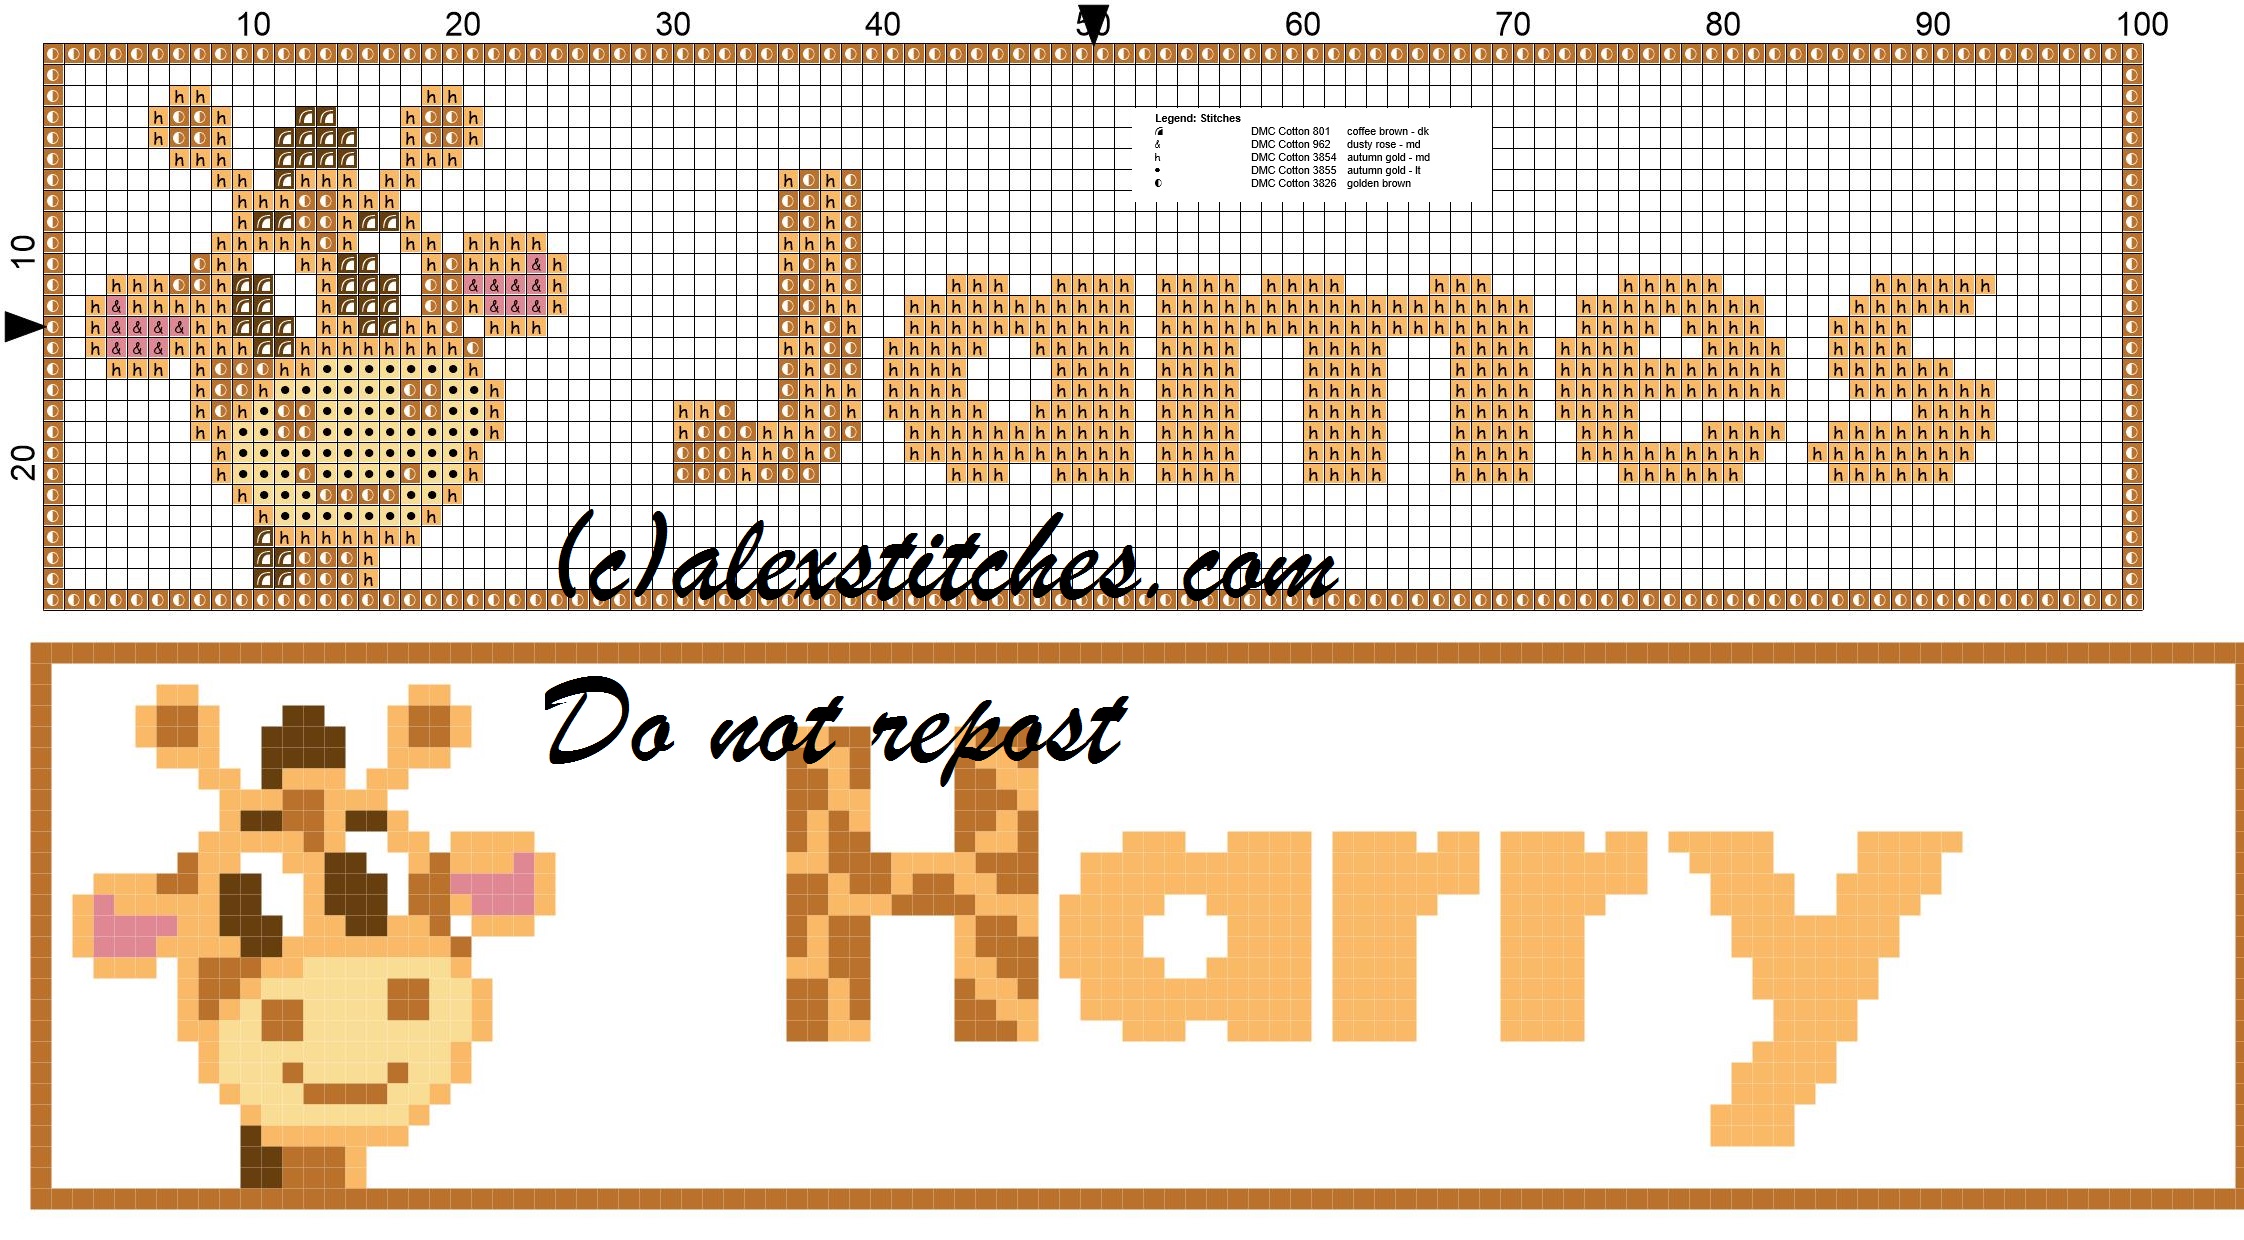 James name with giraffe cross stitch pattern